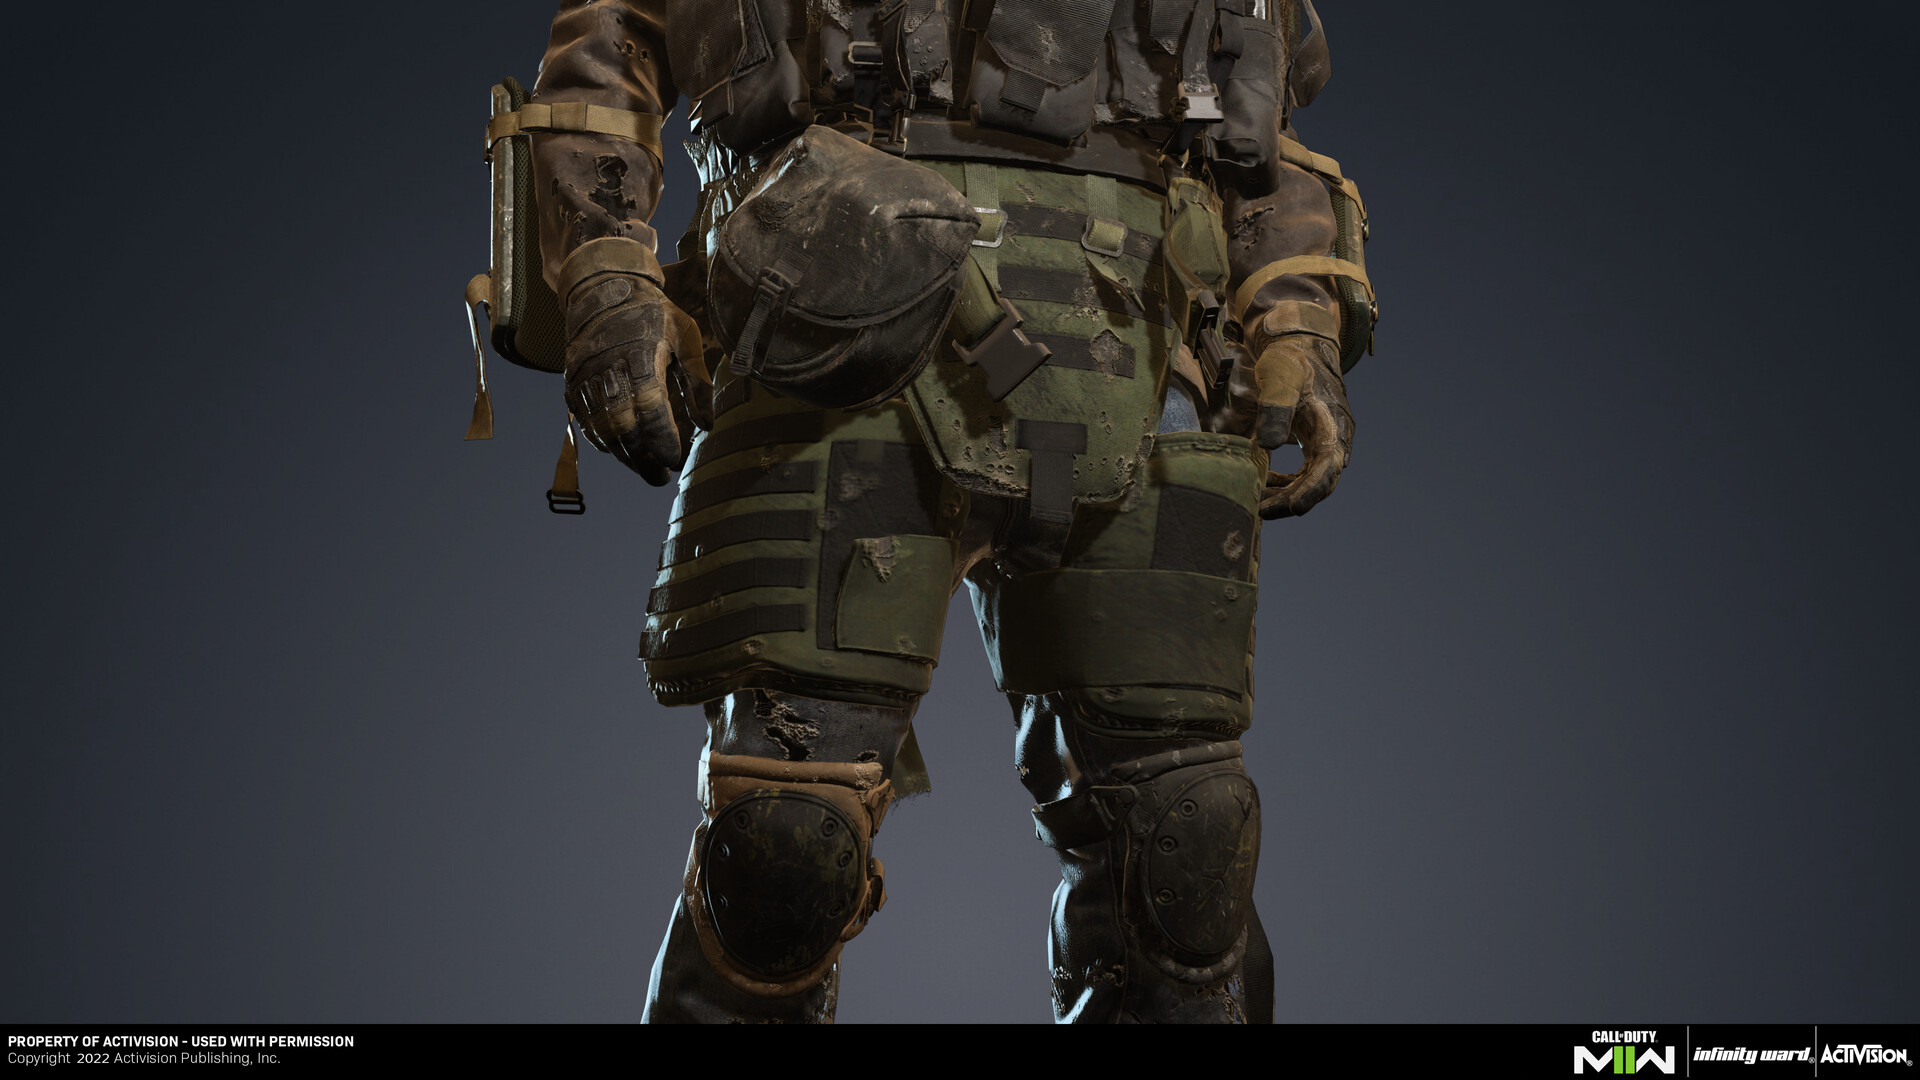 Juggernaut (character), Call of Duty Wiki